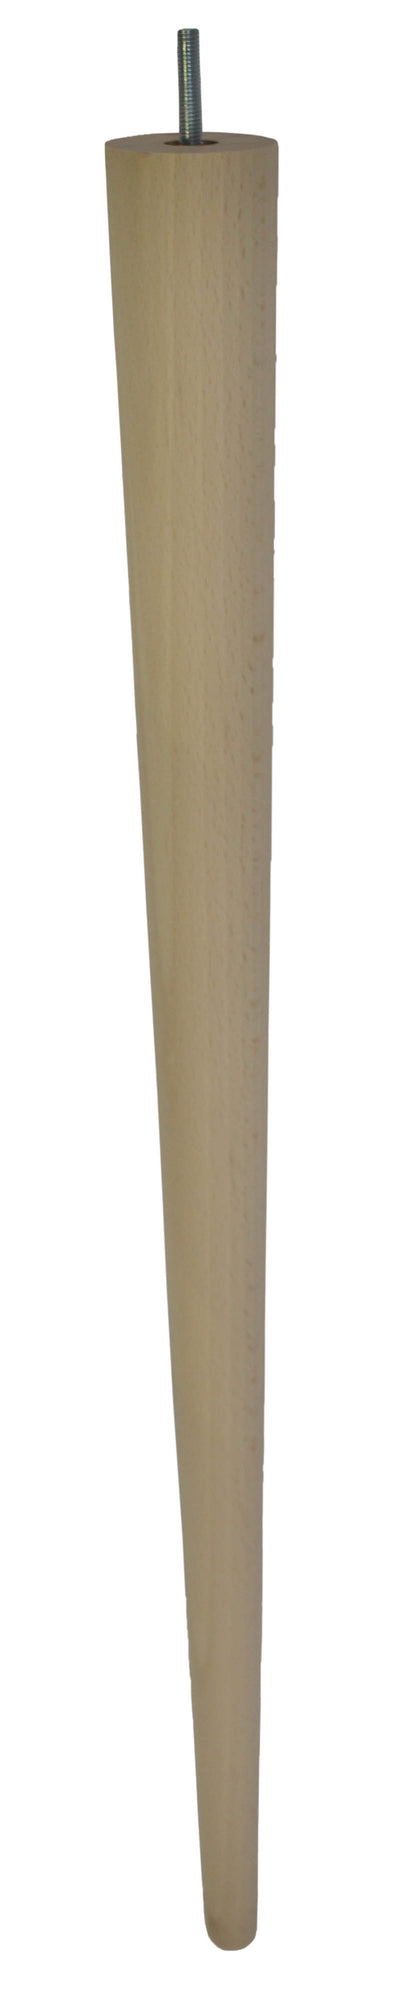 McCobb Table Legs Tall - Raw Finish - Set of 4 - with Standard 8mm Dowel Screw Fixing (M8)